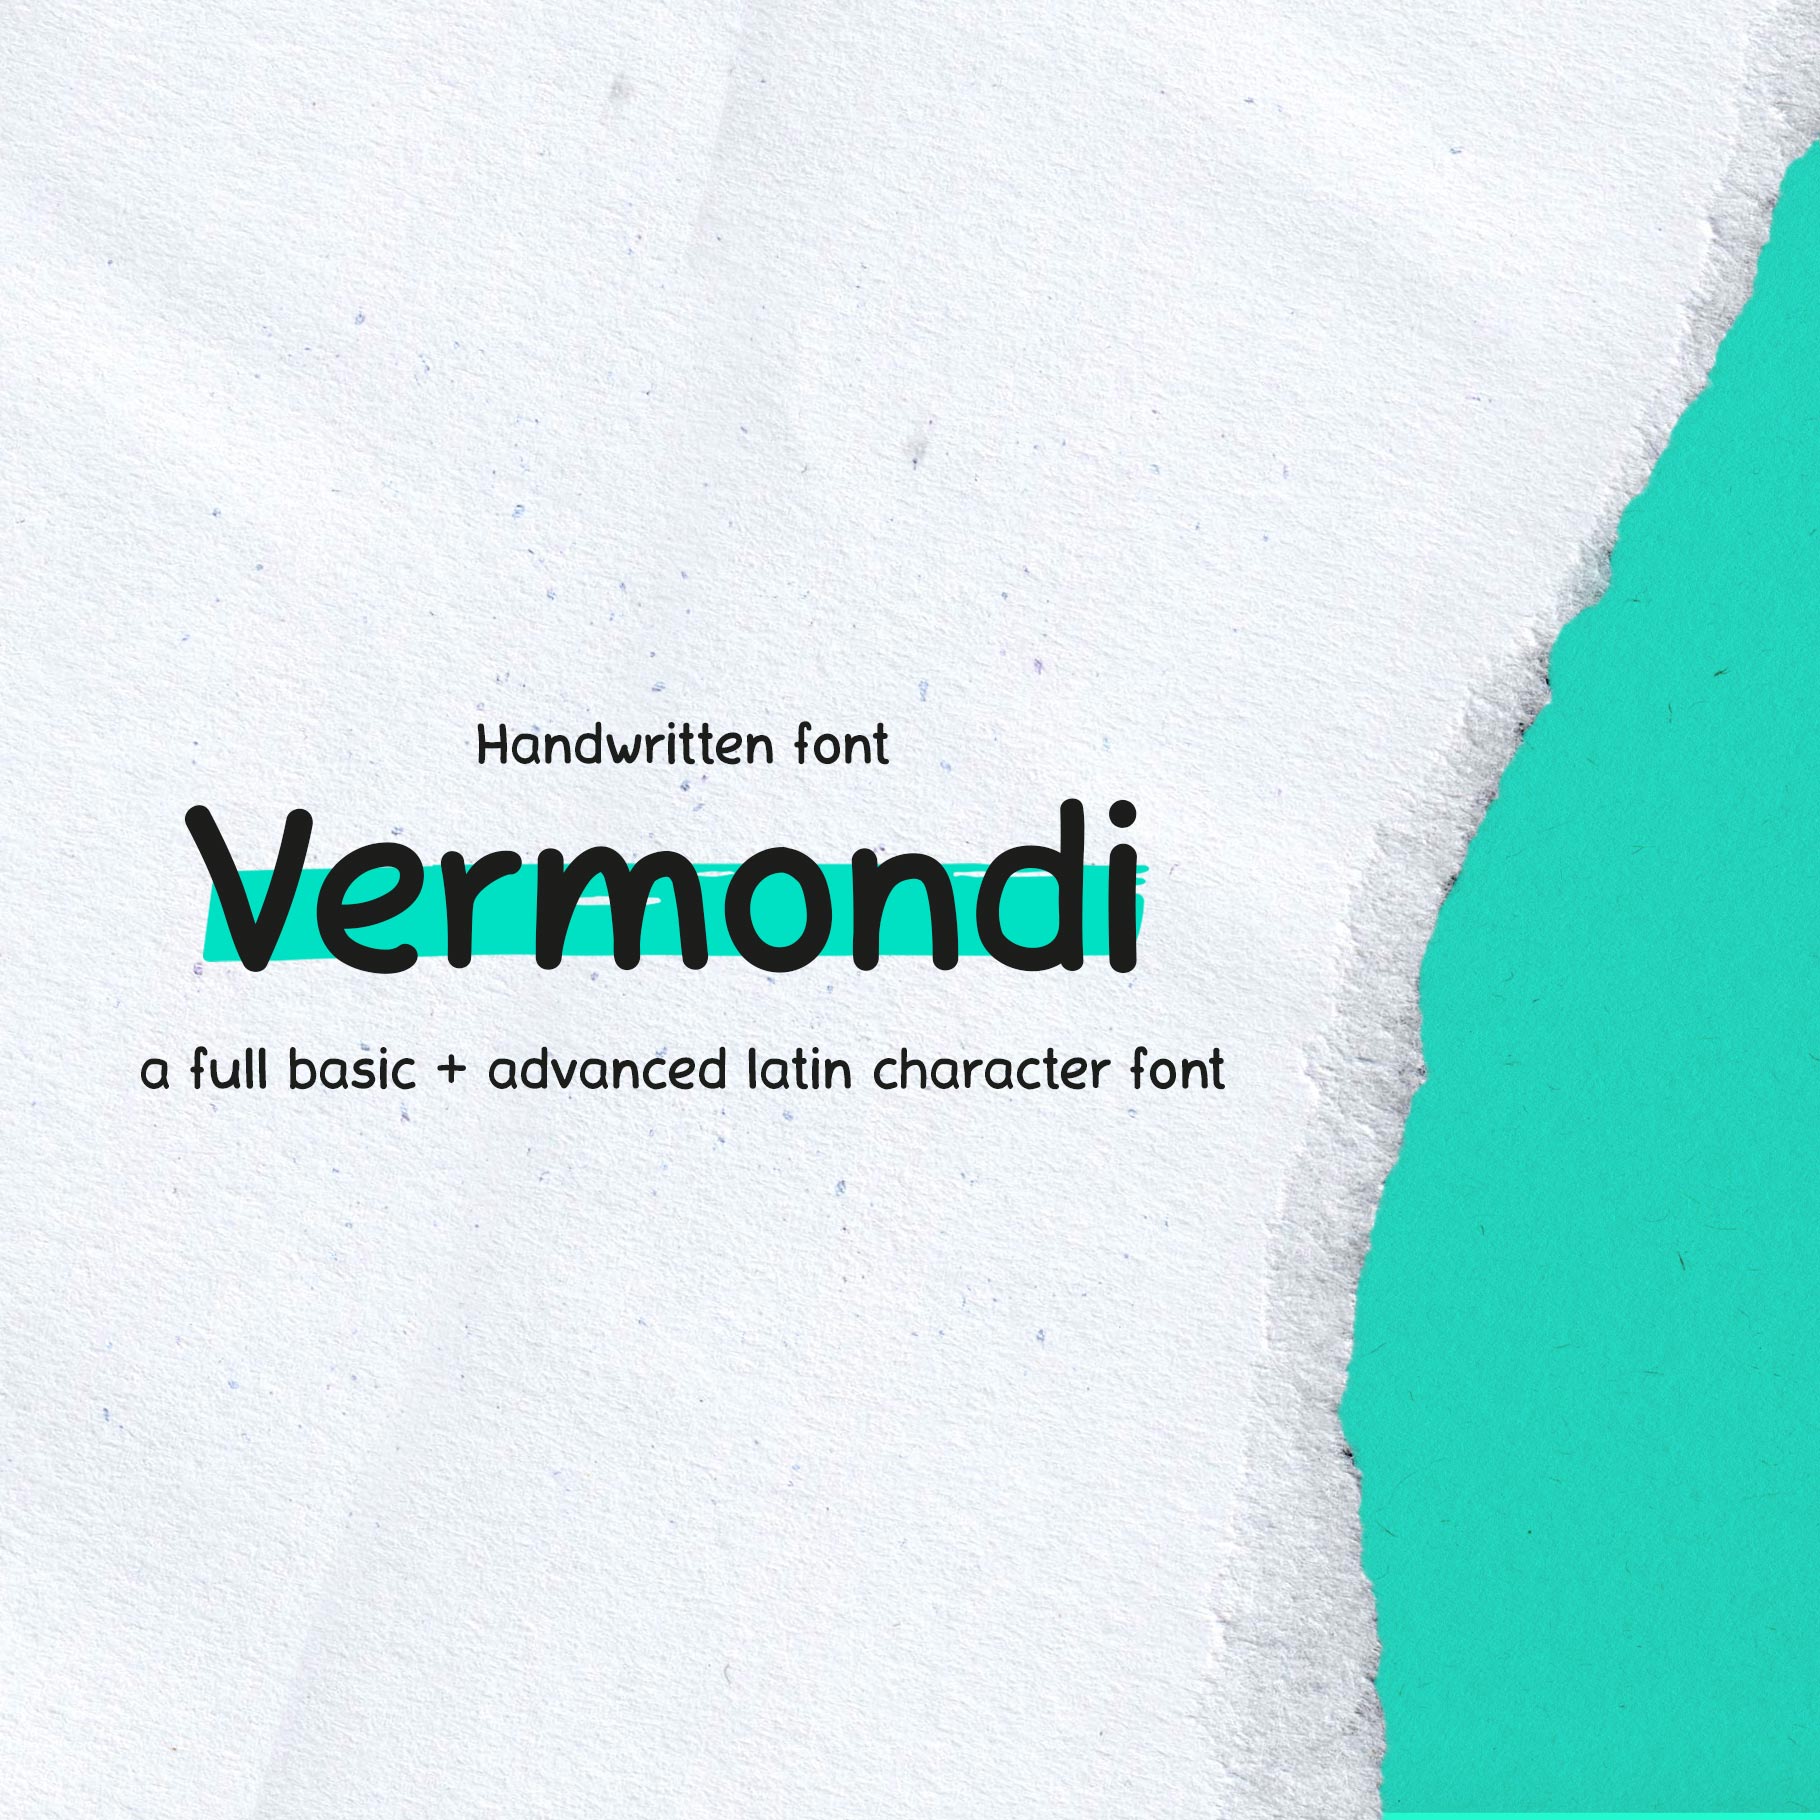 Vermondi Handwritten Font - main image preview.